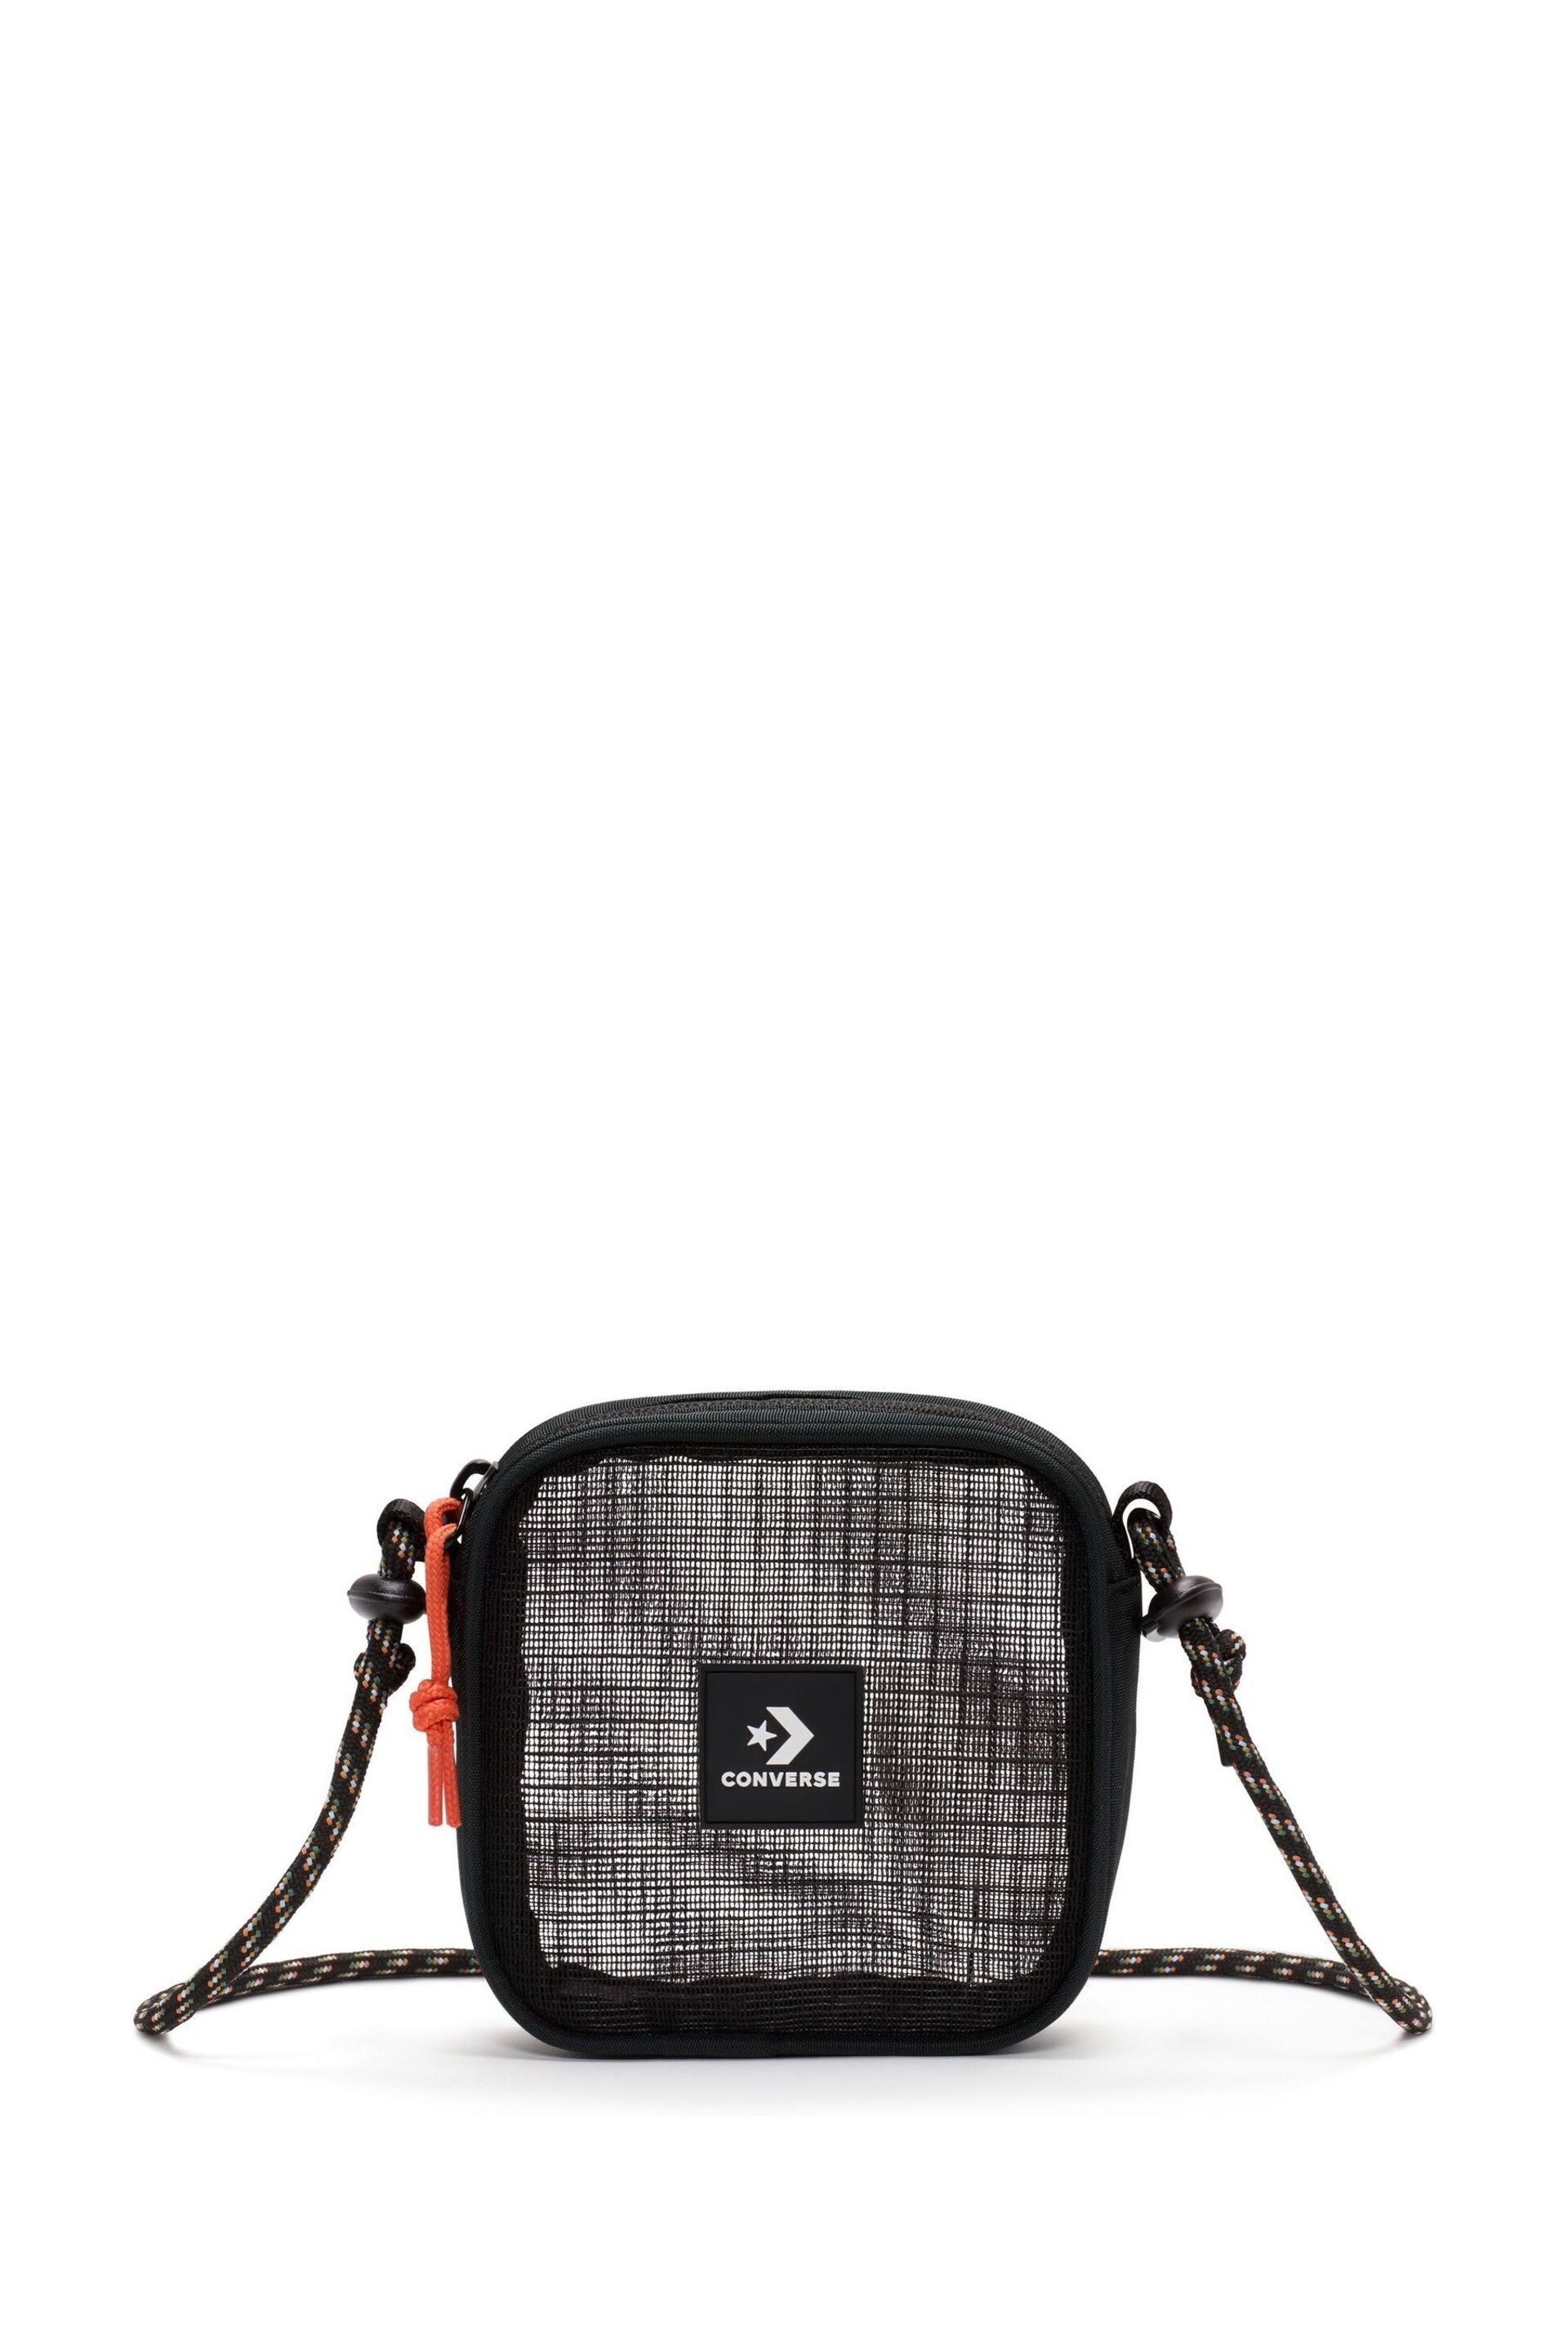 Converse Black Crossbody Pocket Bag - Image 1 of 6